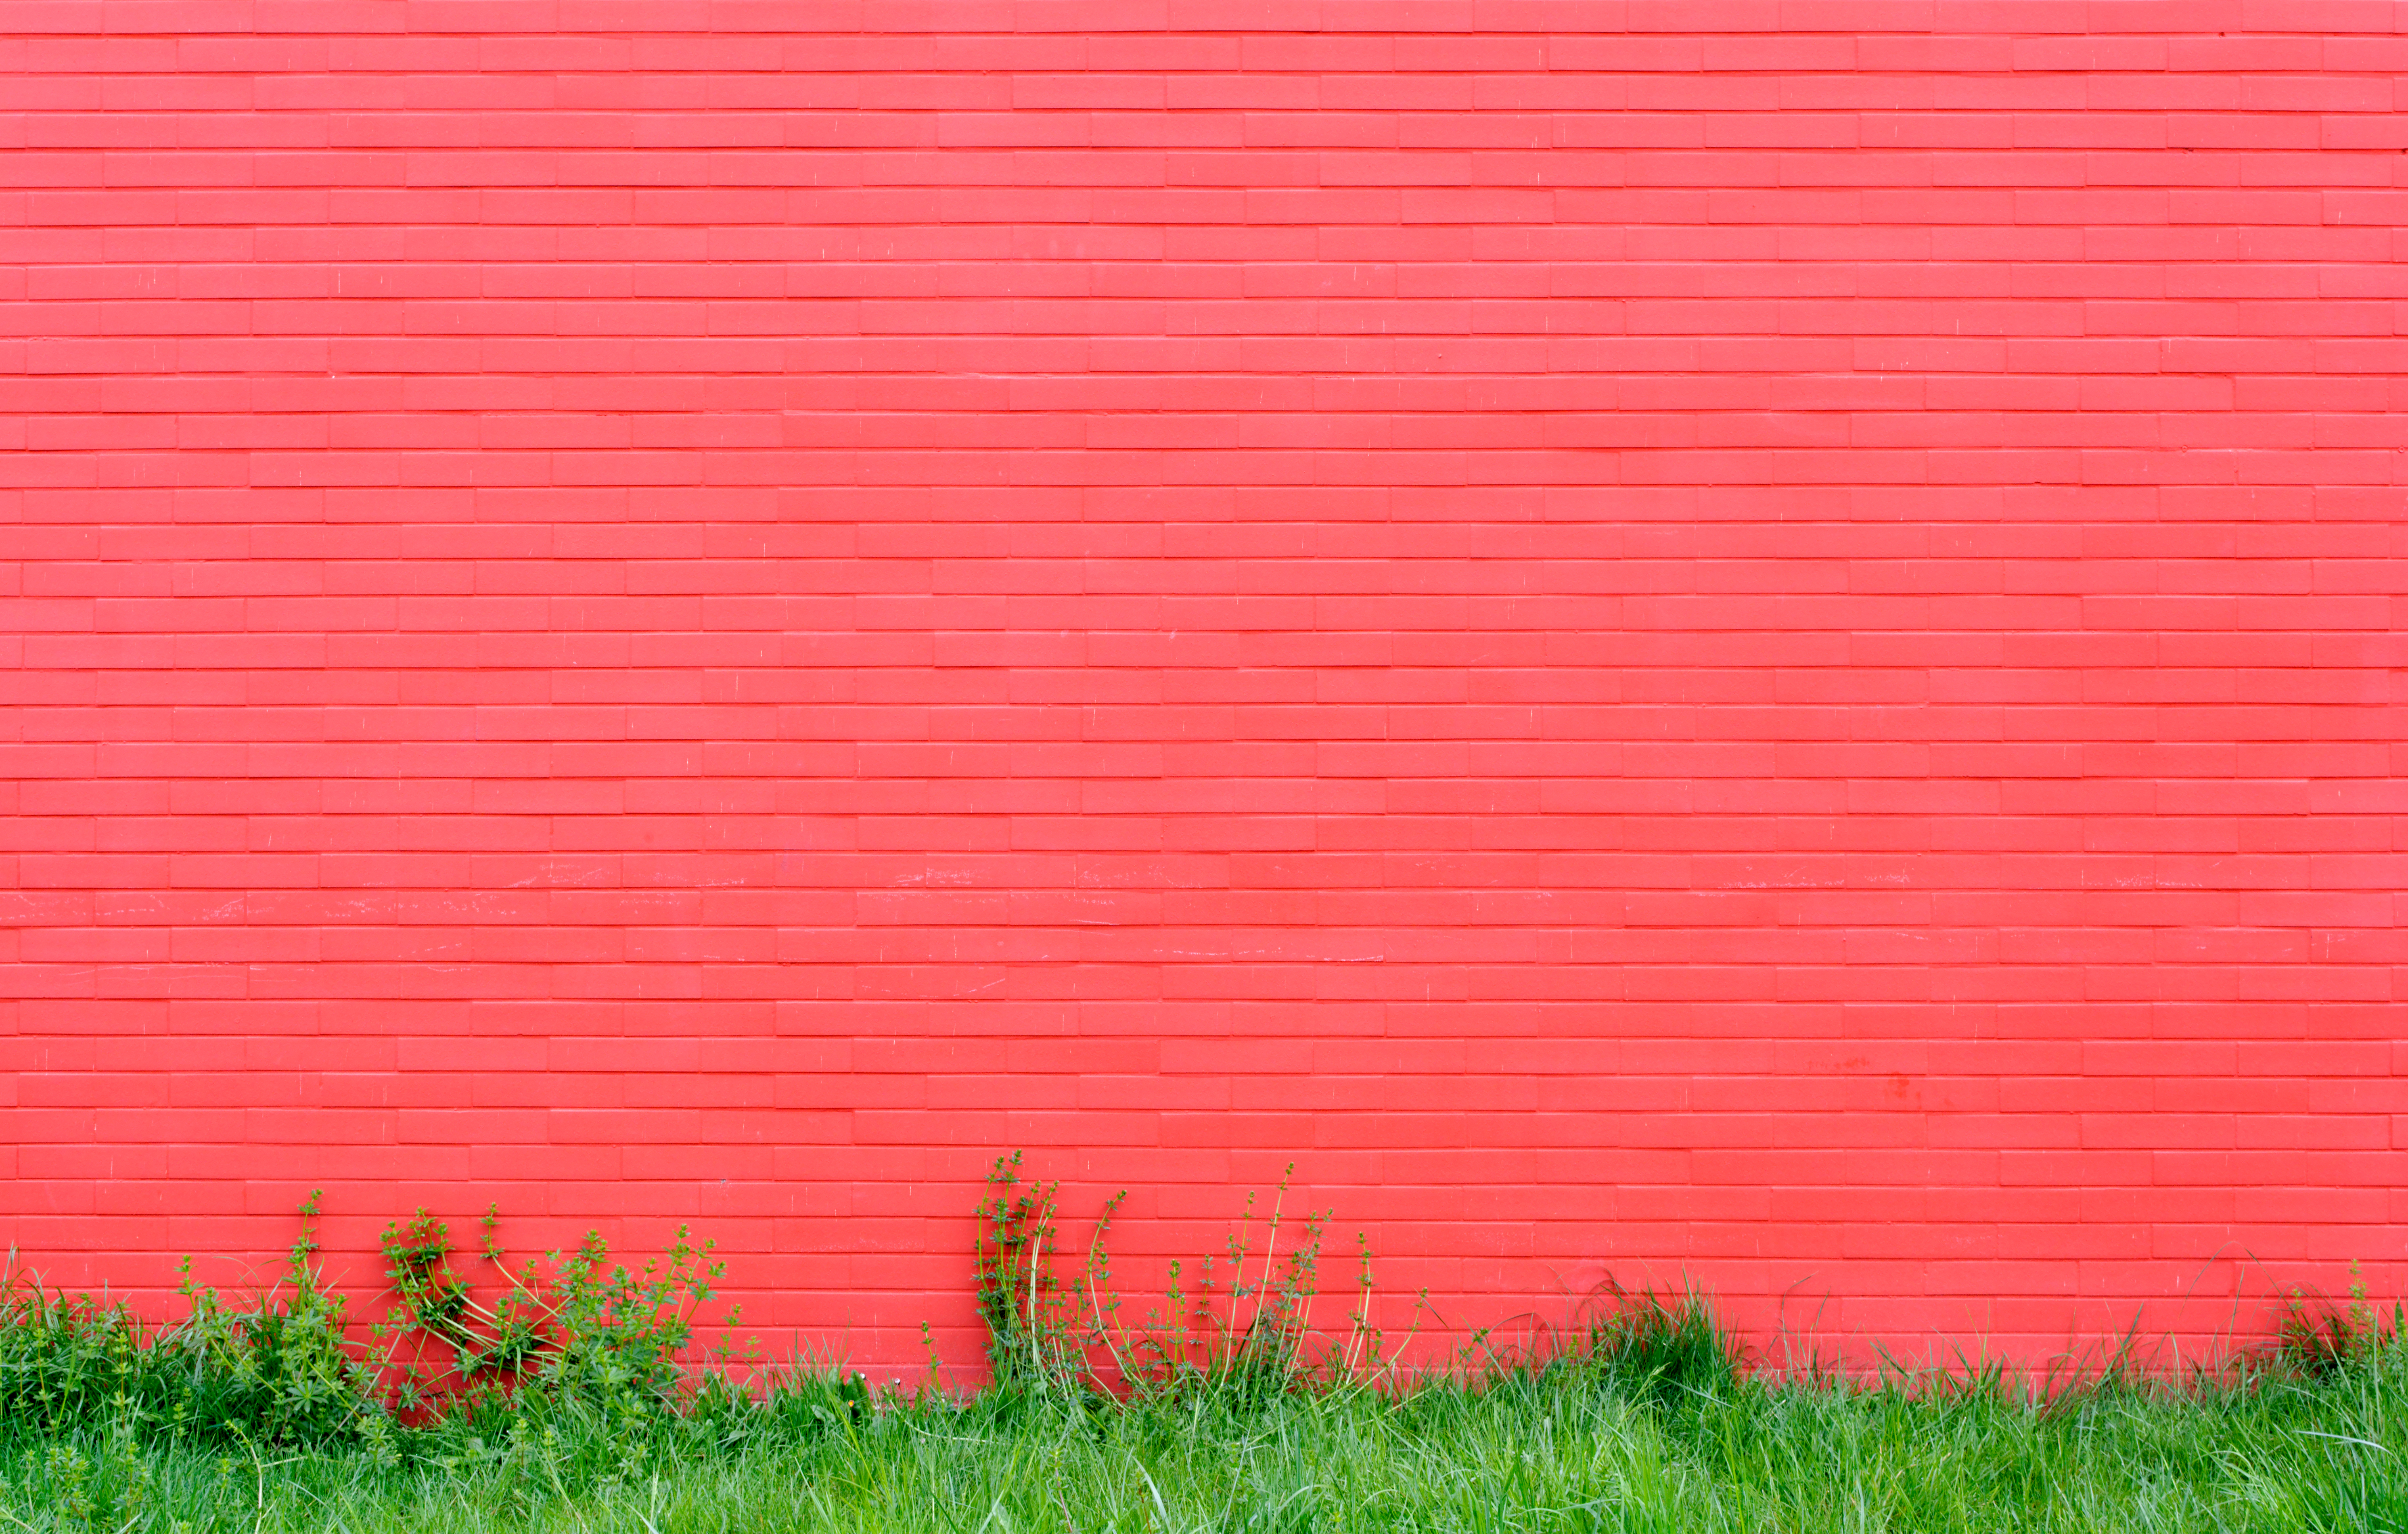 bricks, miscellanea, miscellaneous, grass, pink, wall